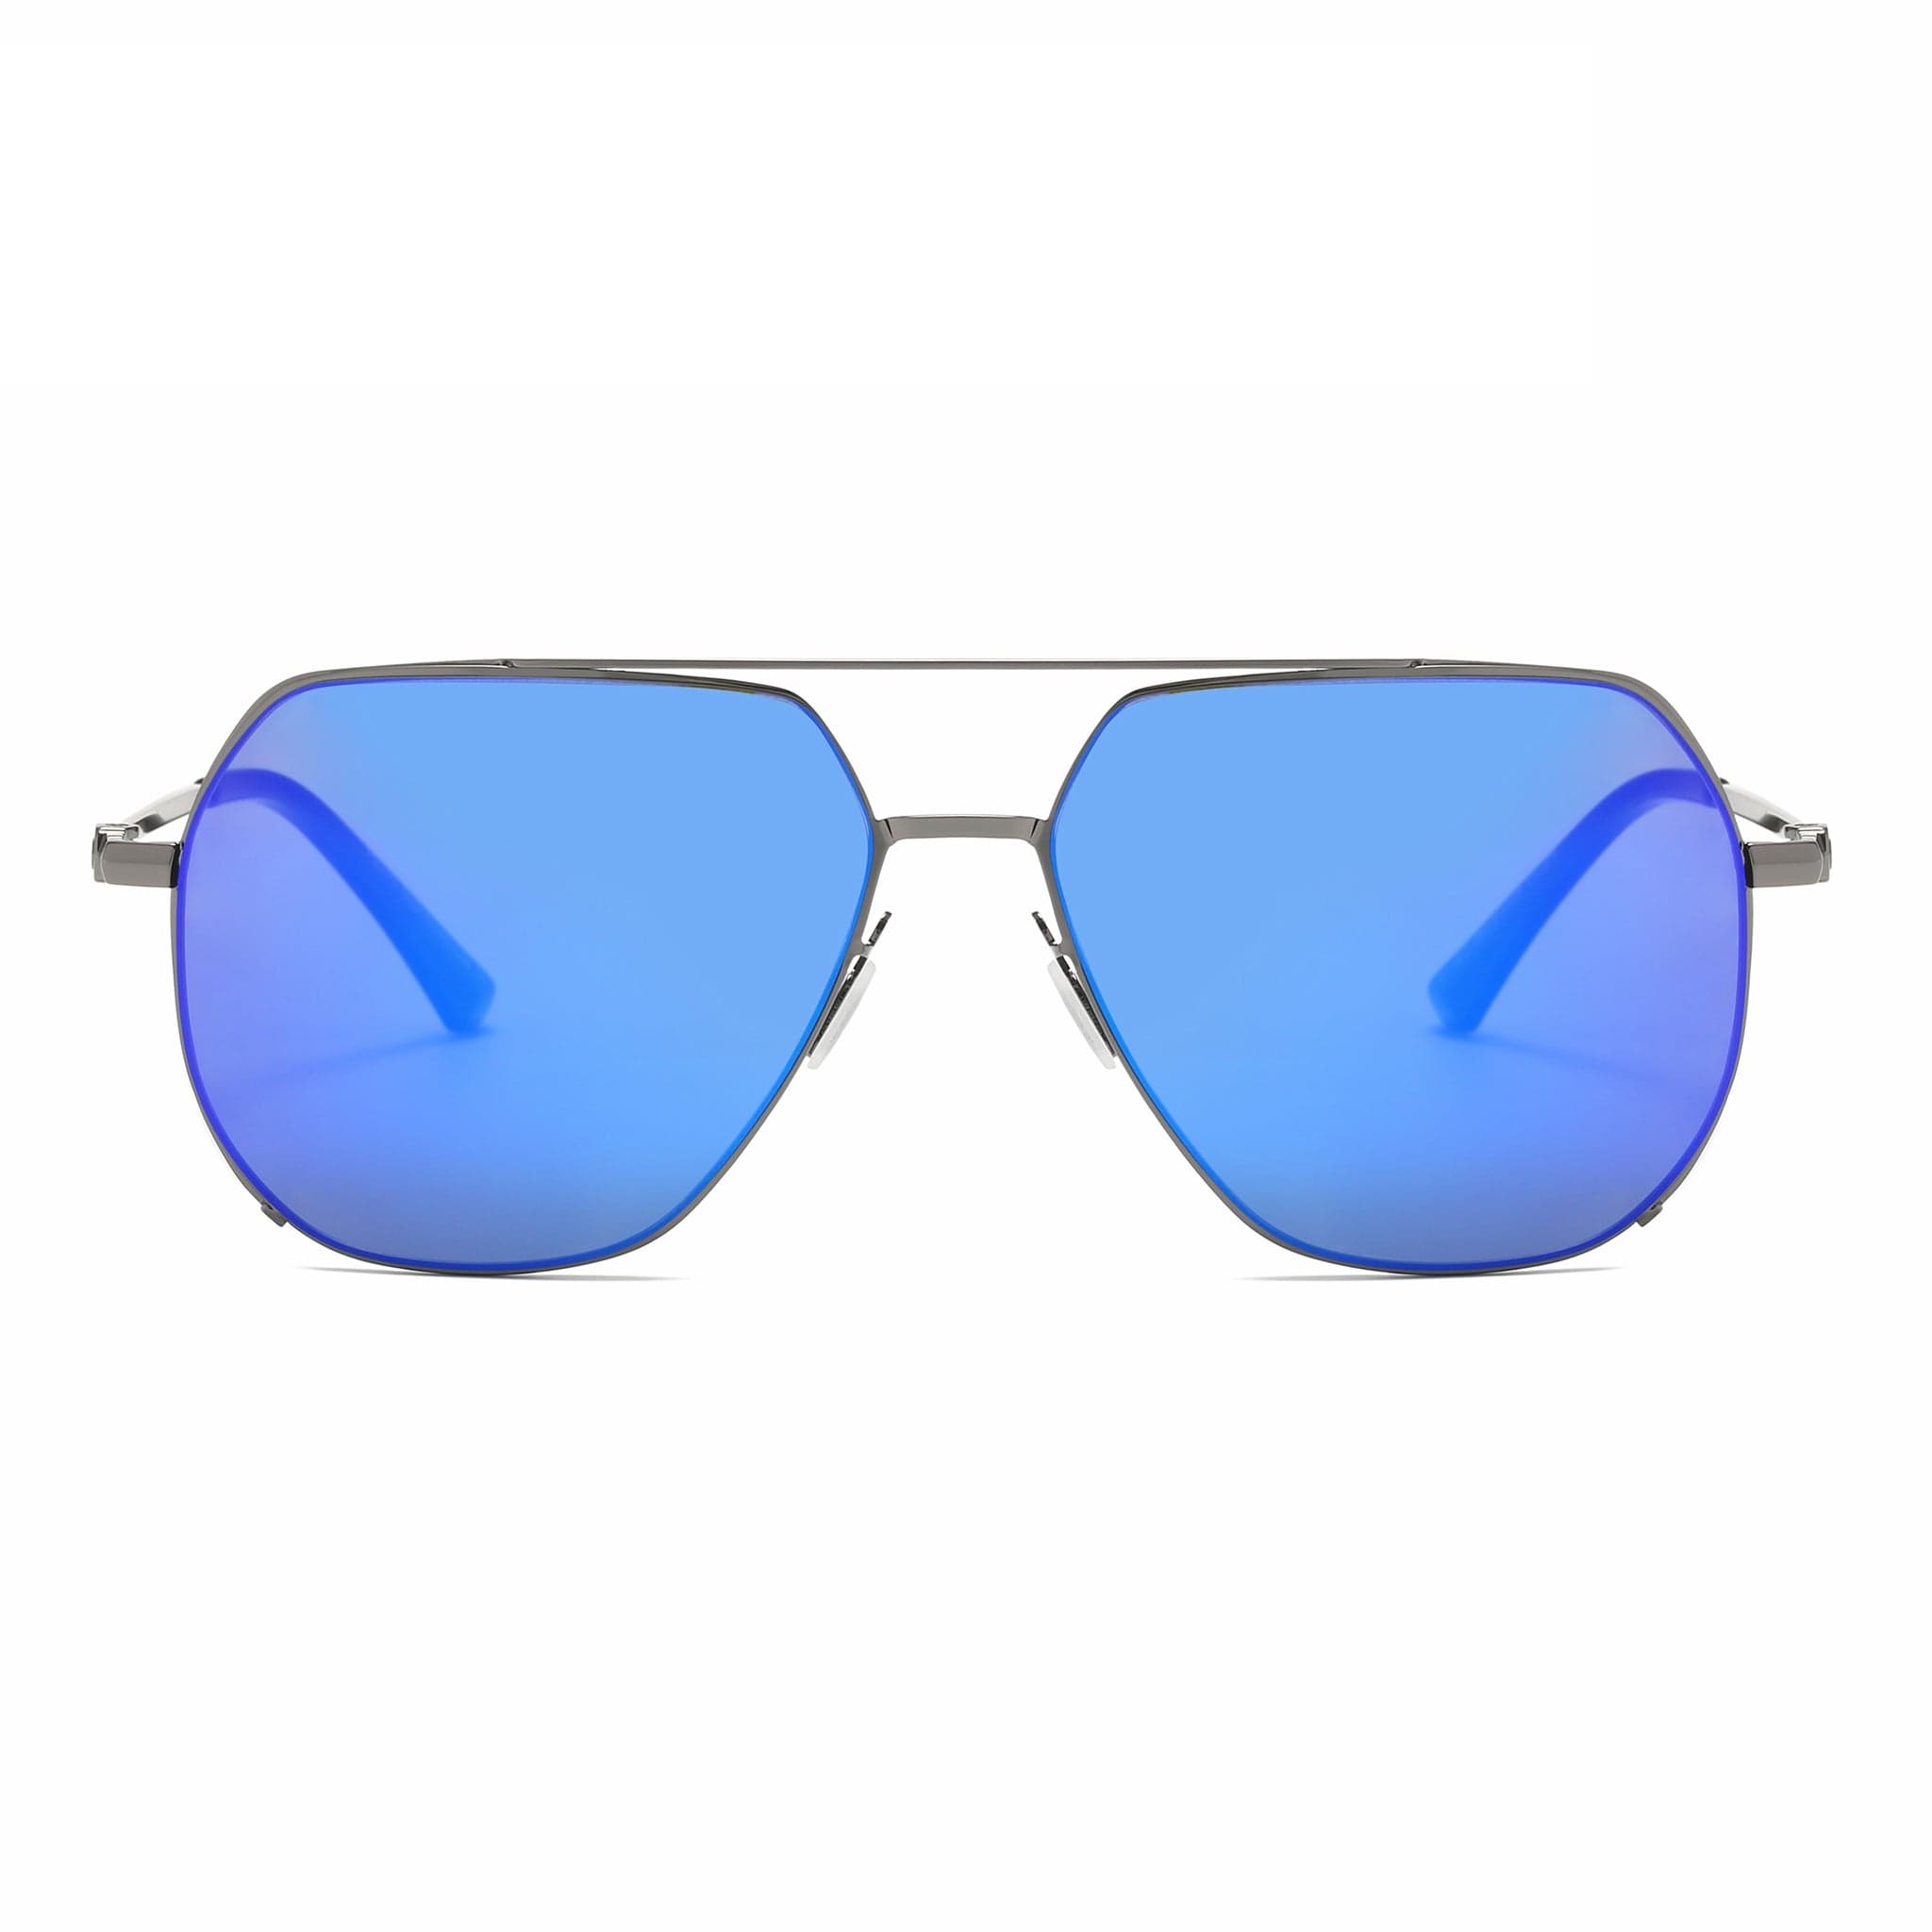 GIUSTIZIERI VECCHI Sunglasses Medium / Cornflower Blue Roma Aviator Duo